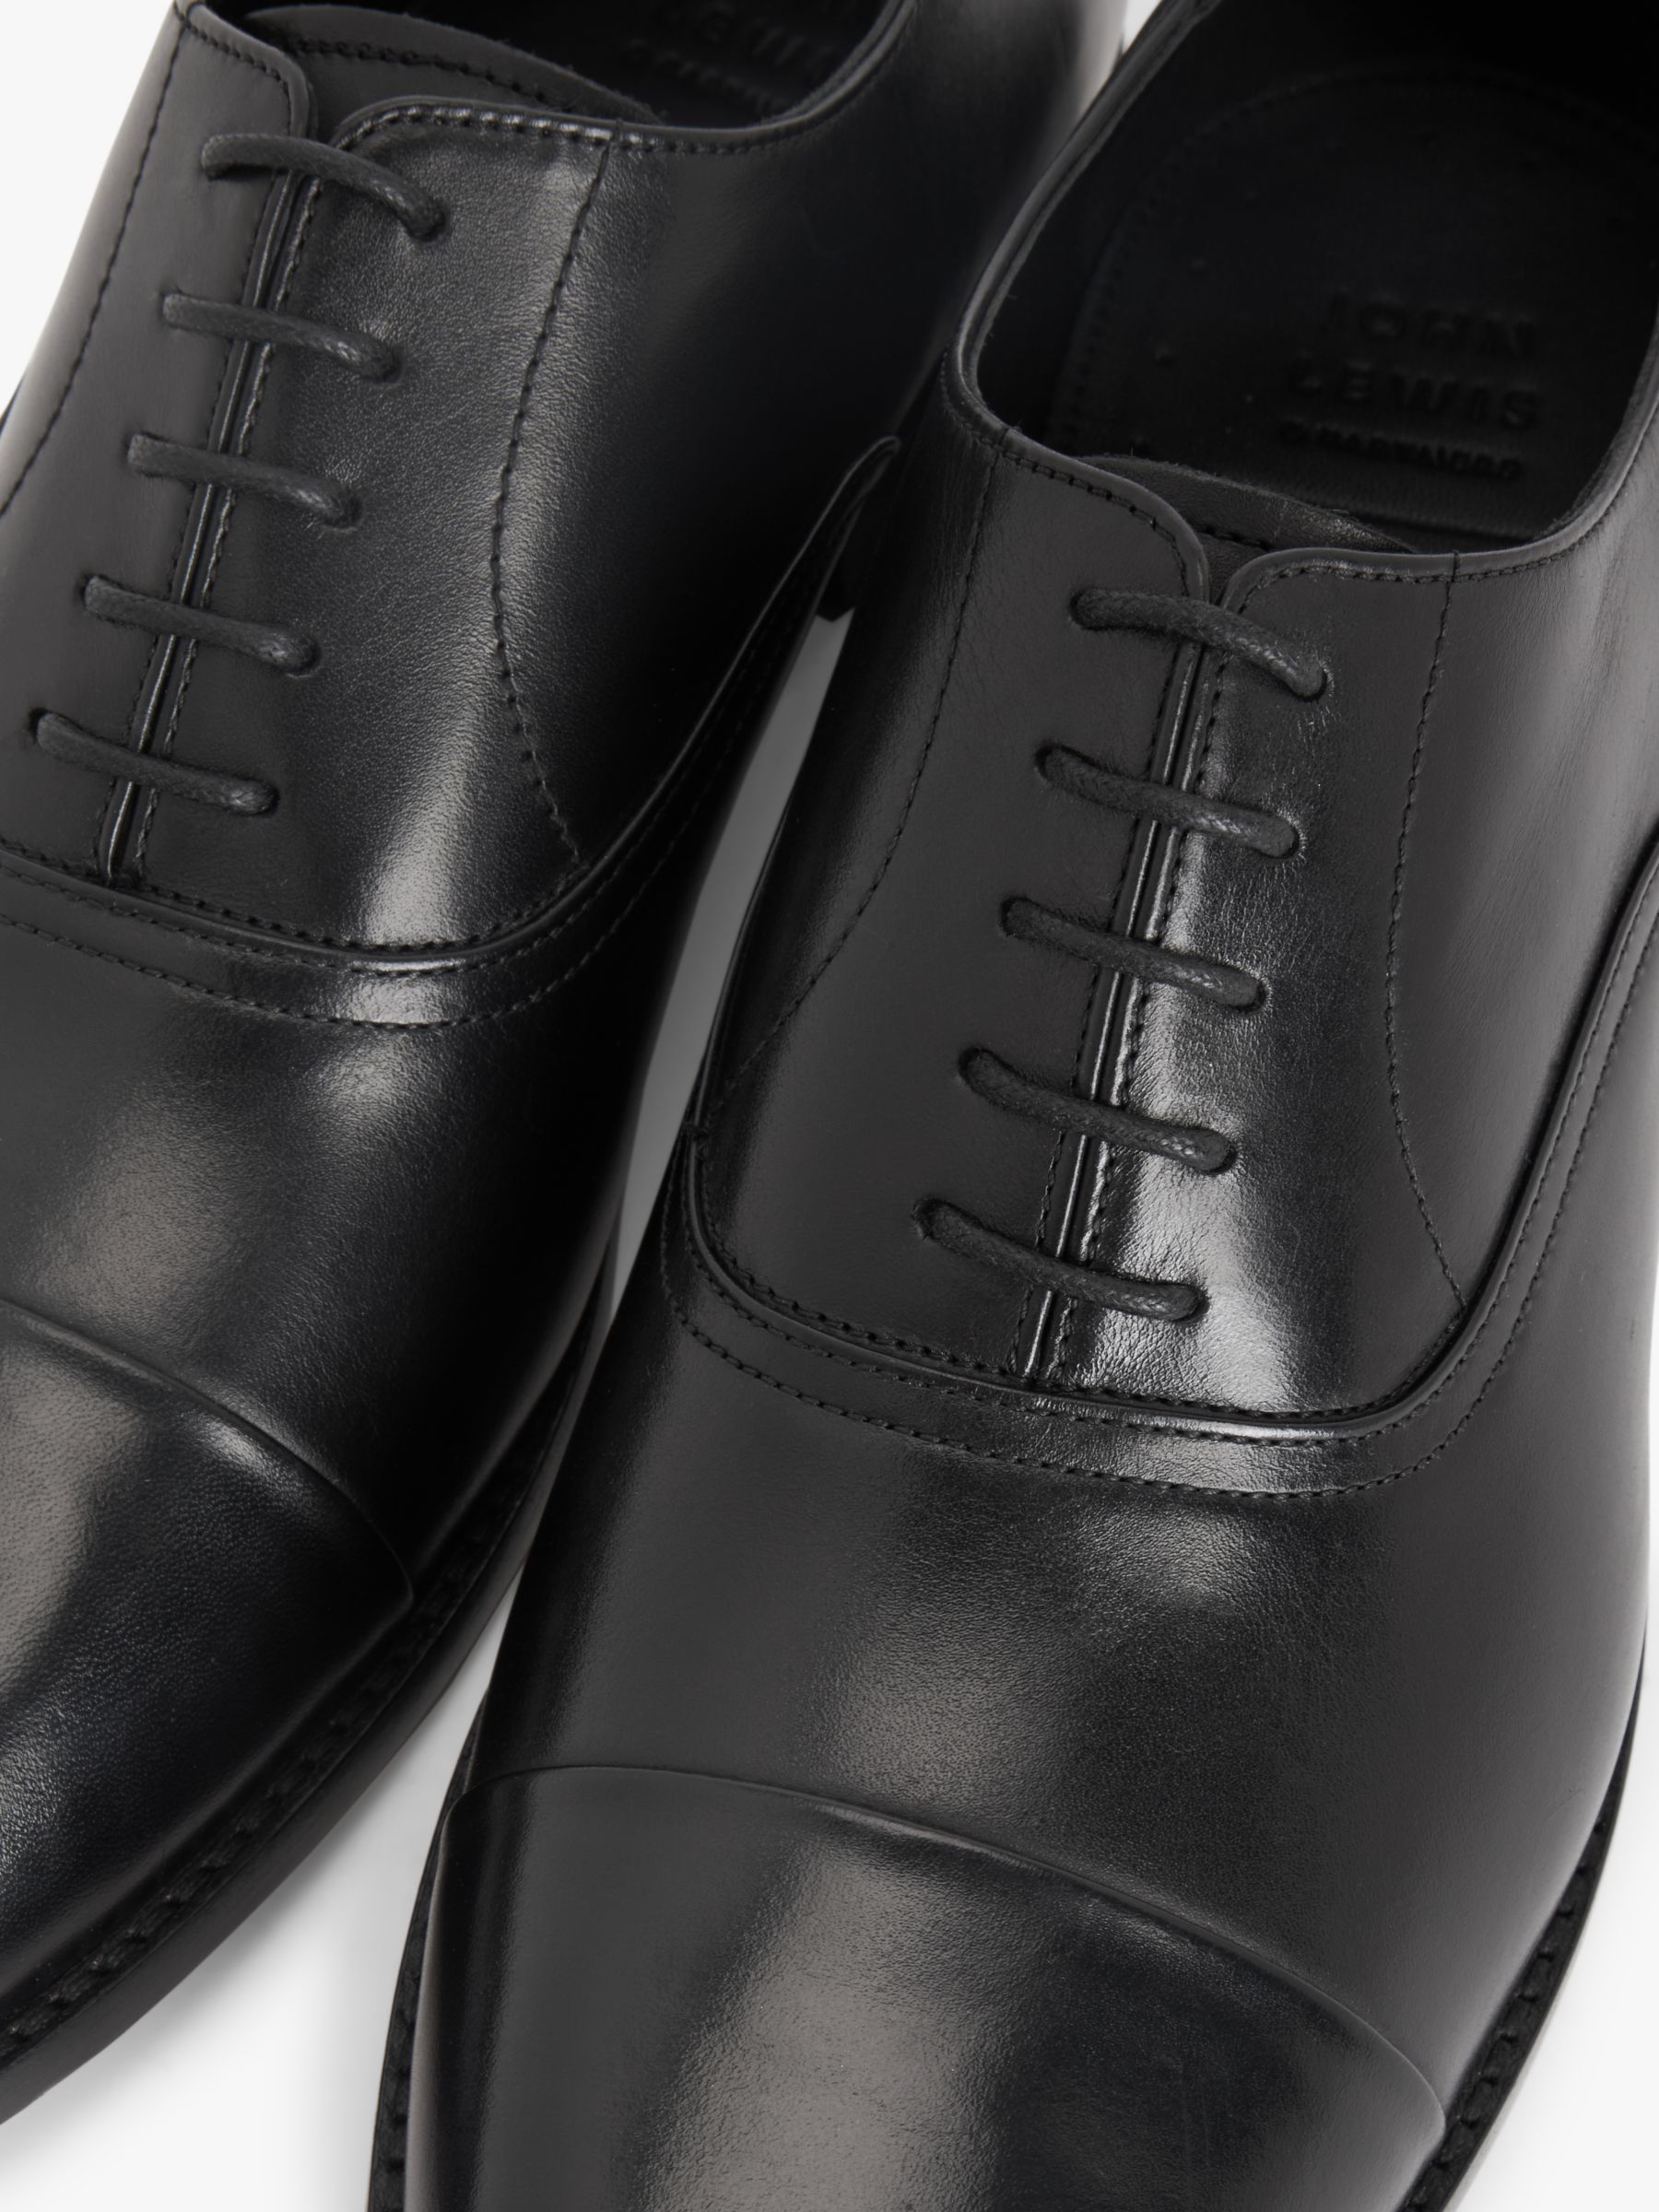 Buy John Lewis Formal Leather Sole Oxford Shoes, Black Online at johnlewis.com